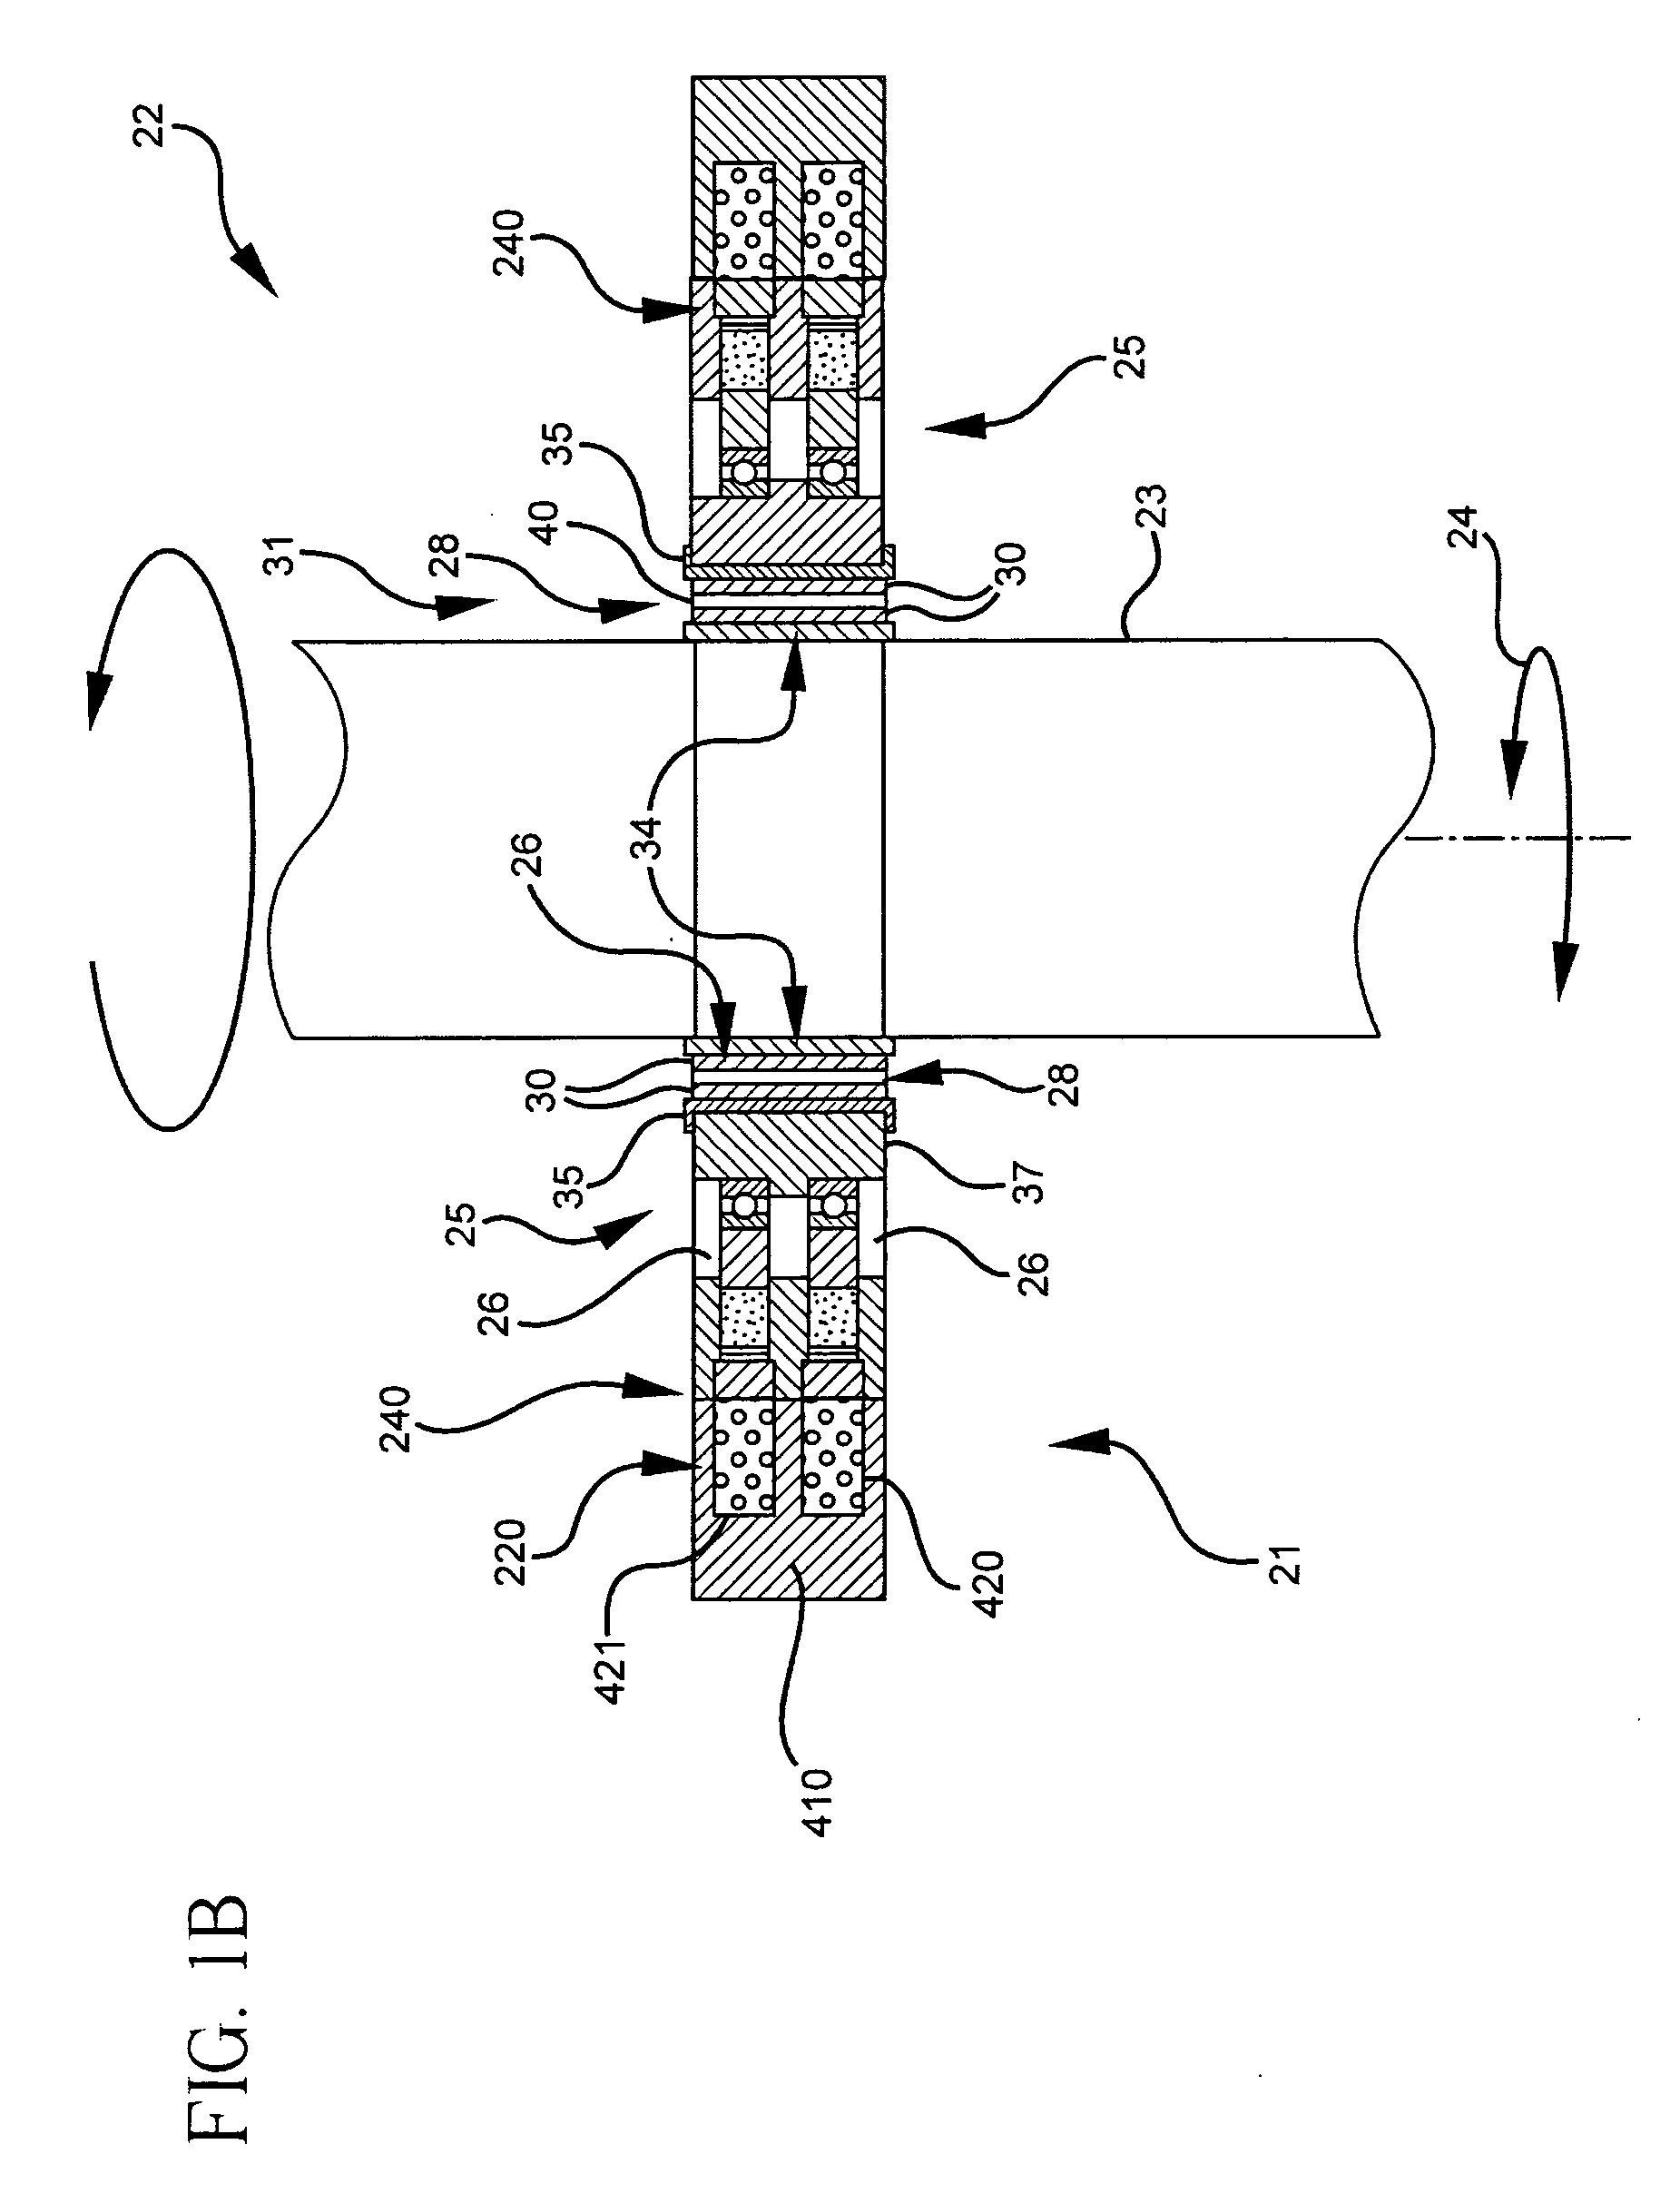 Rotating machine active balancer and method of dynamically balancing a rotating machine shaft with torsional vibrations